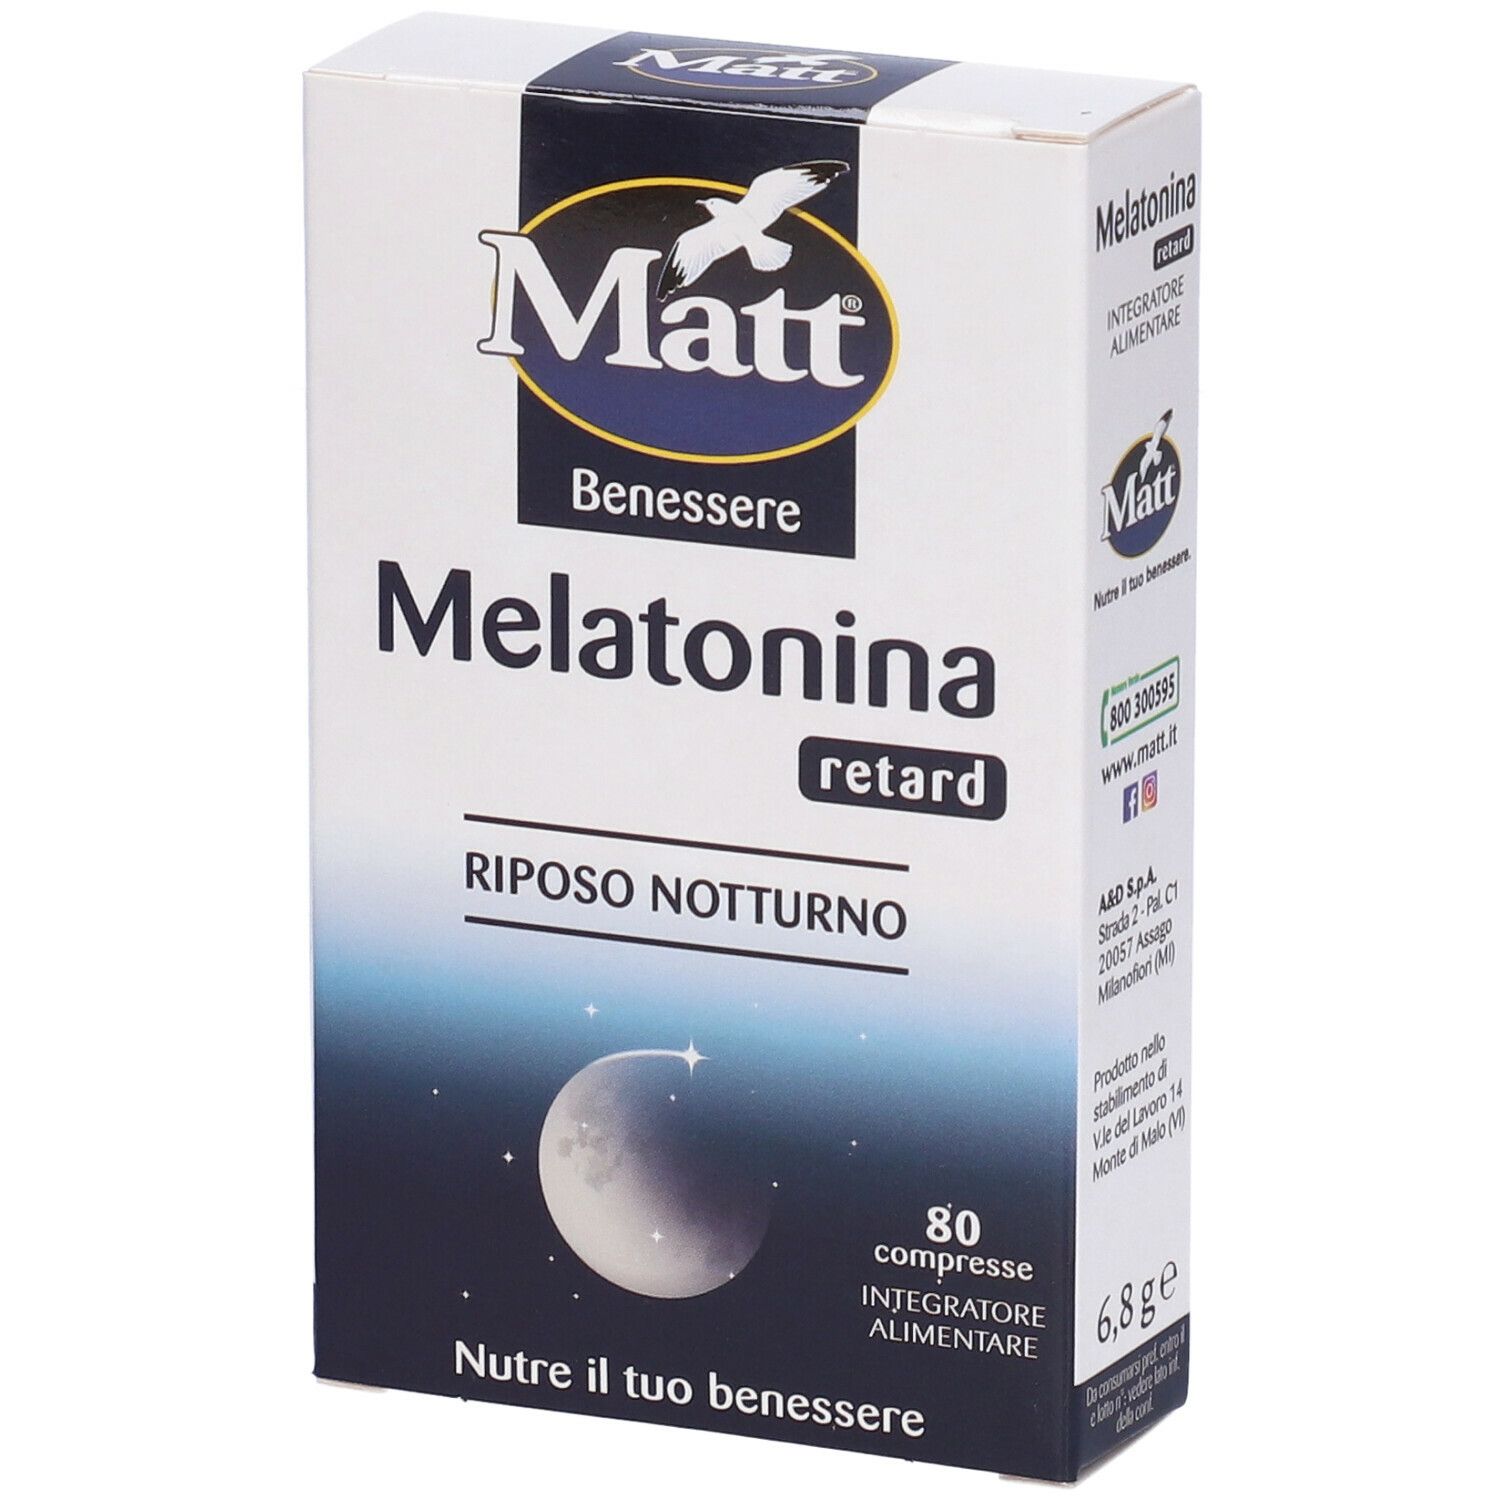 Image of Matt® Benessere Melatonina retard